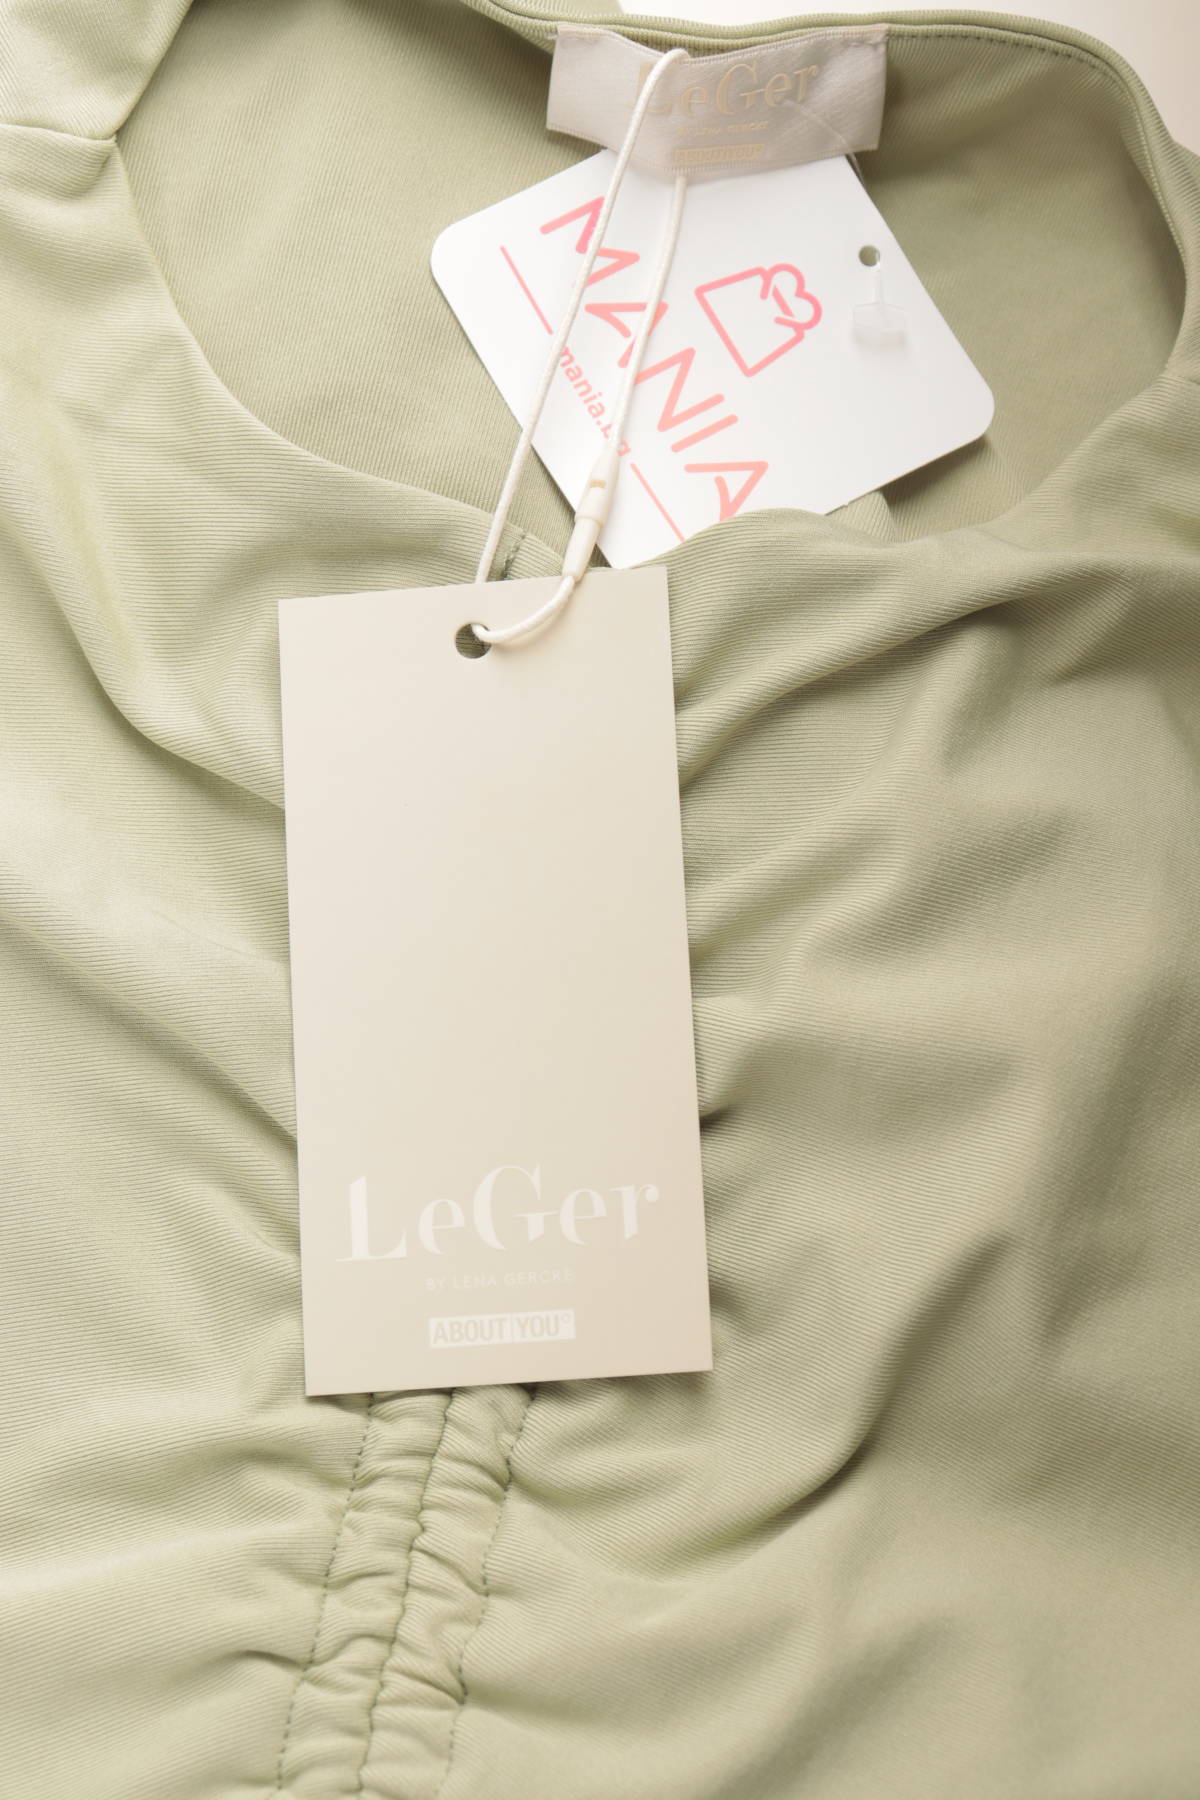 Ежедневна рокля LEGER BY LENA GERCKE3